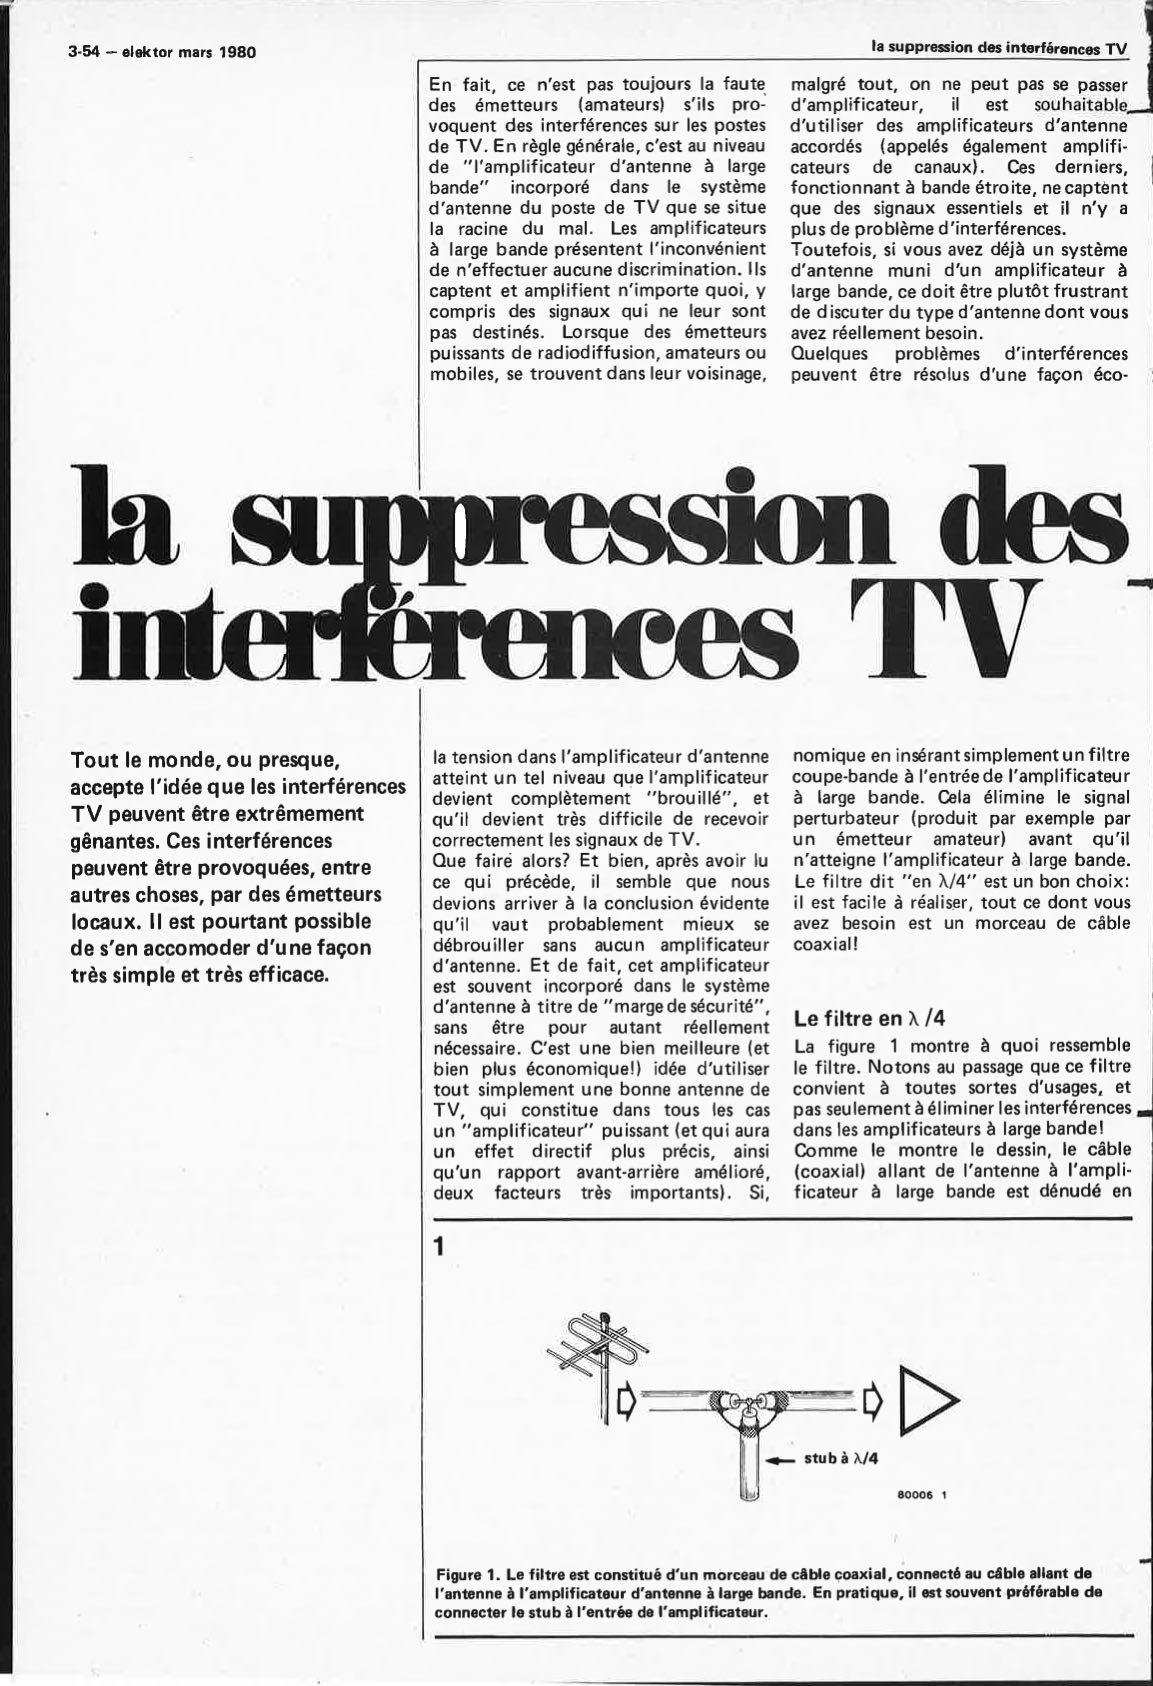 La suppression des interférences TV